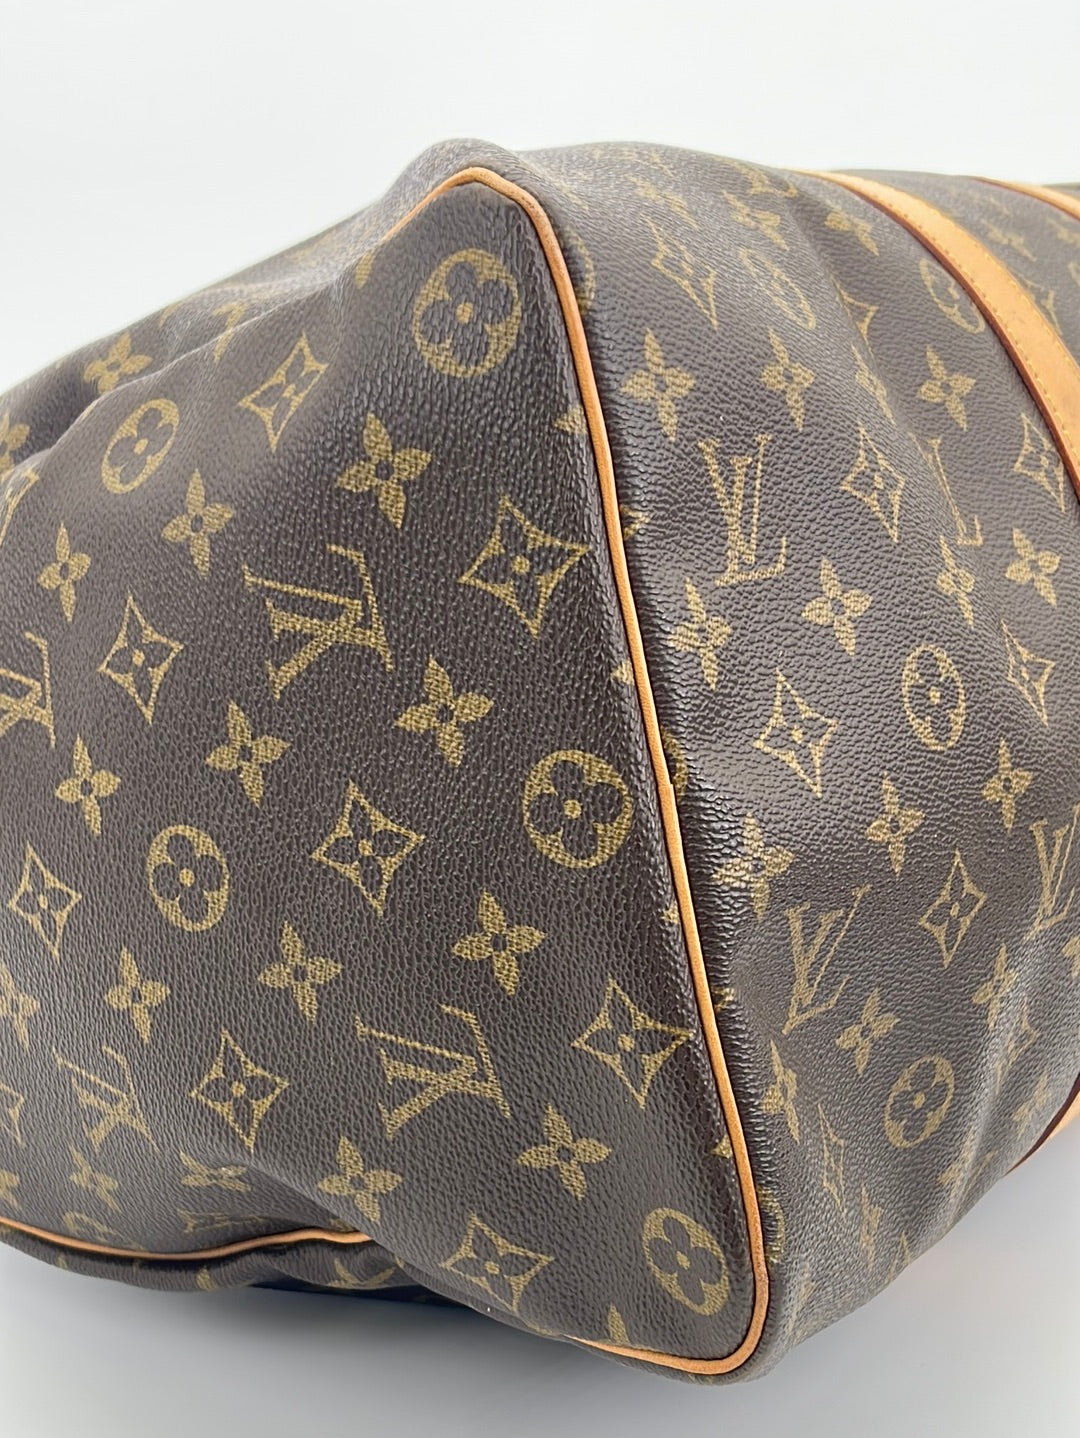 Louis Vuitton 1 of 1 Perle Monogram Vernis Keepall 45 Duffle Bag 862404